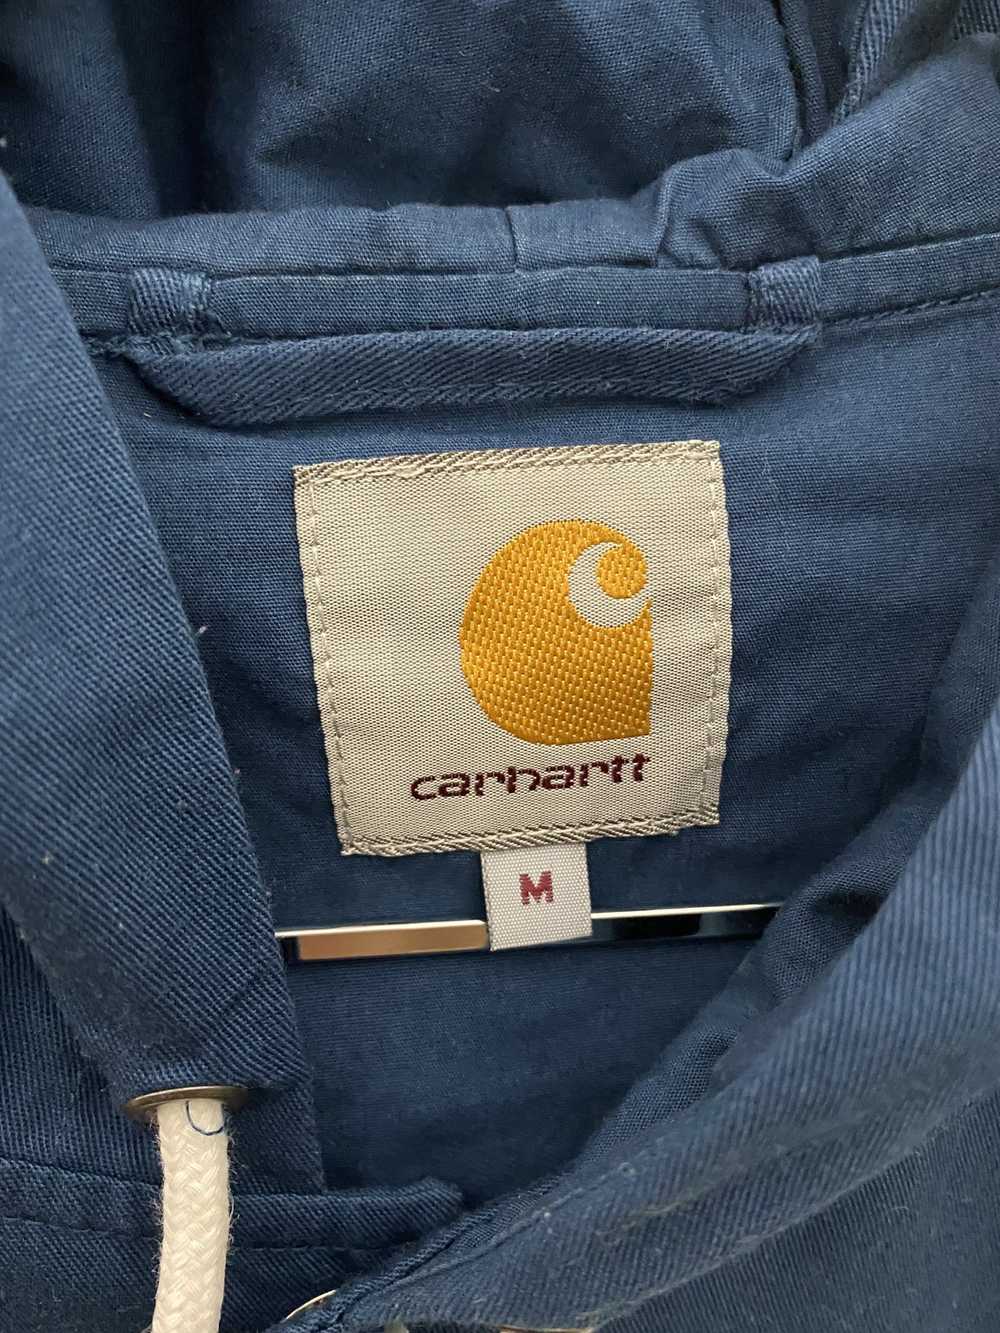 Carhartt Carhartt jacket size M - image 3